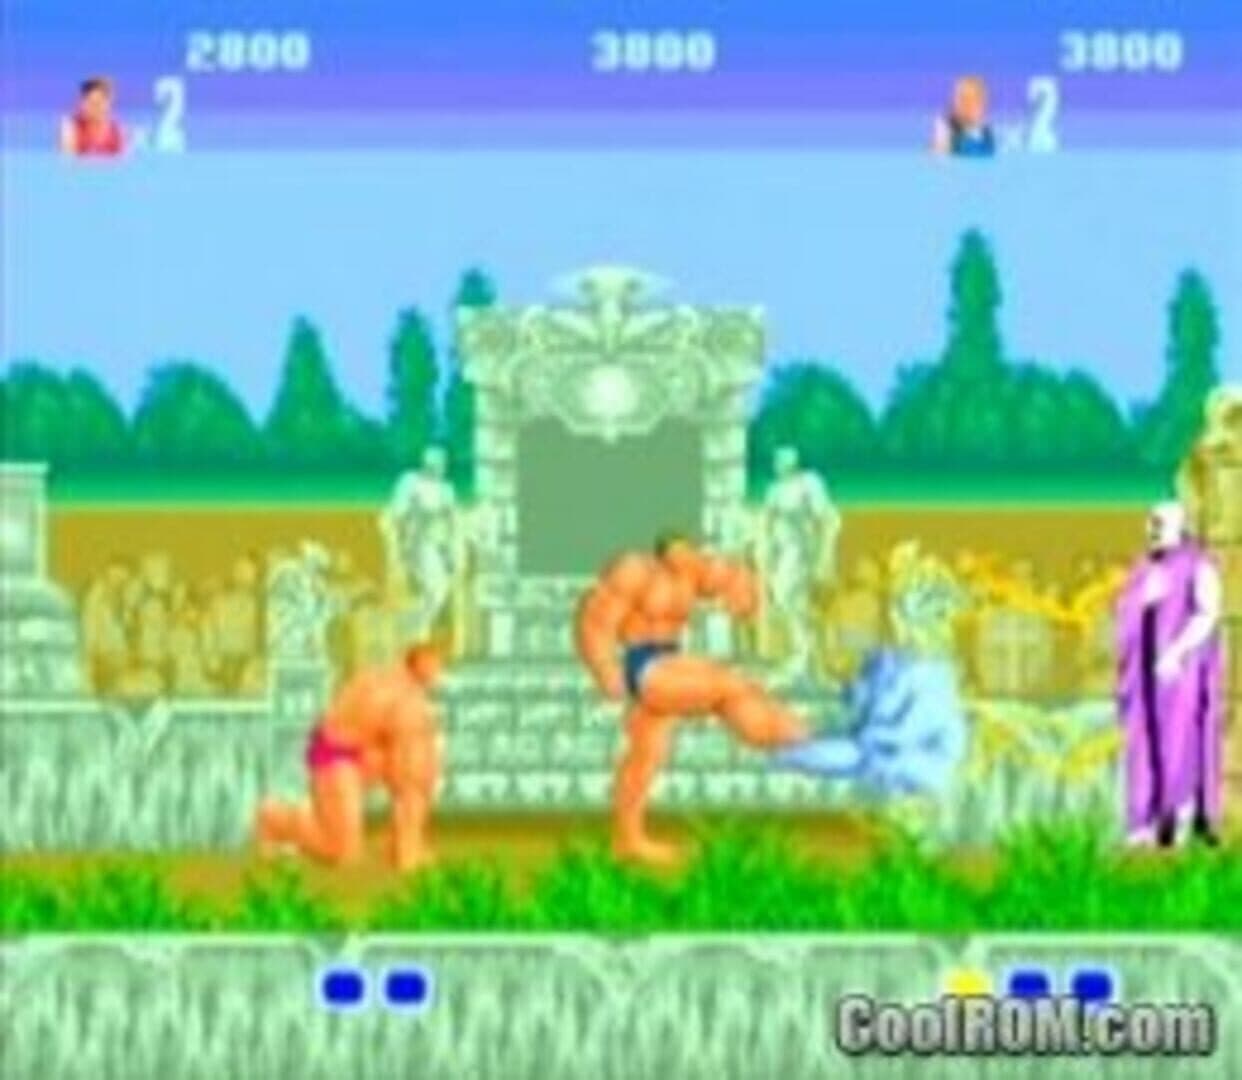 Sega Smash Pack Volume 1 Image